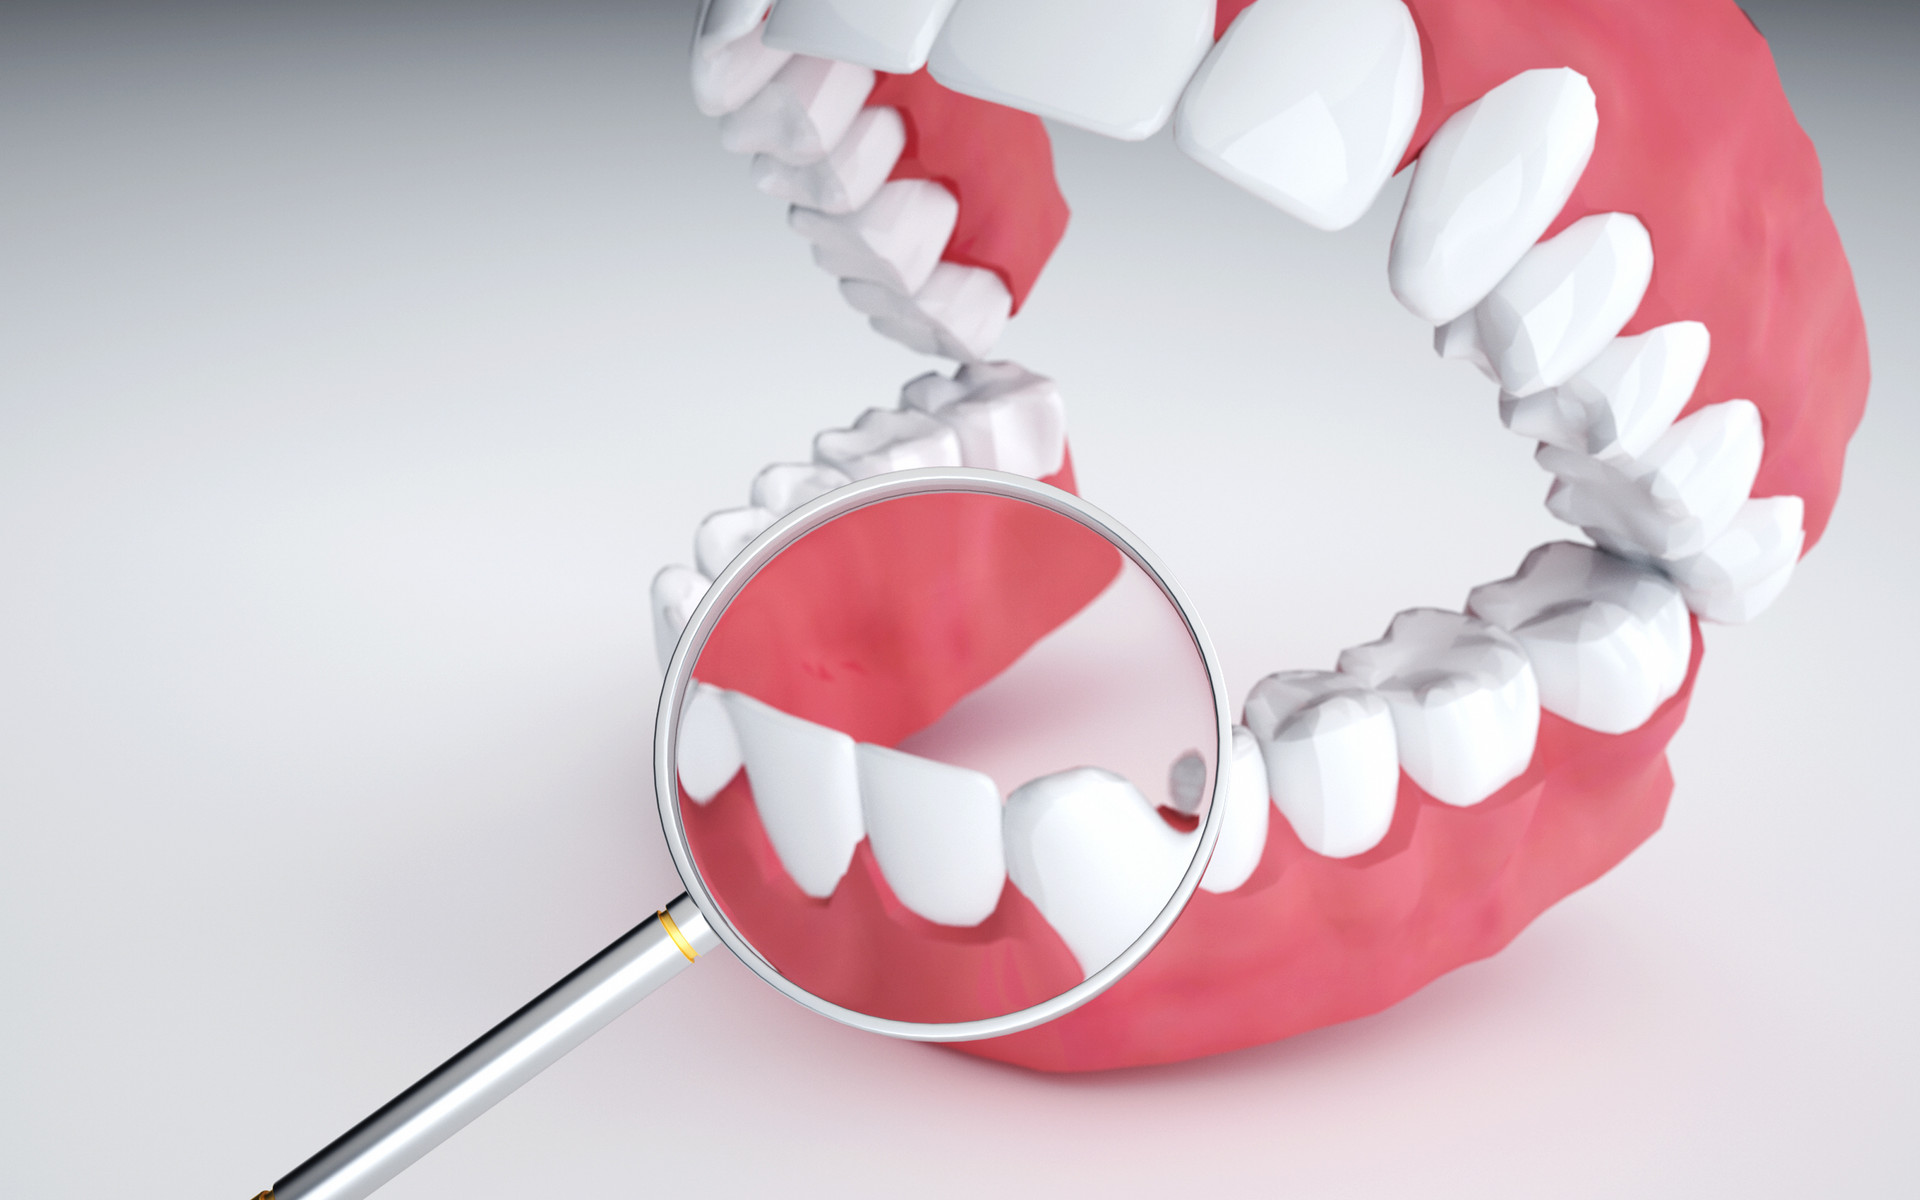 Clin Oral Investig：与传统香烟相比，电子烟对牙周组织的影响<font color="red">较小</font>，但是仍需警惕